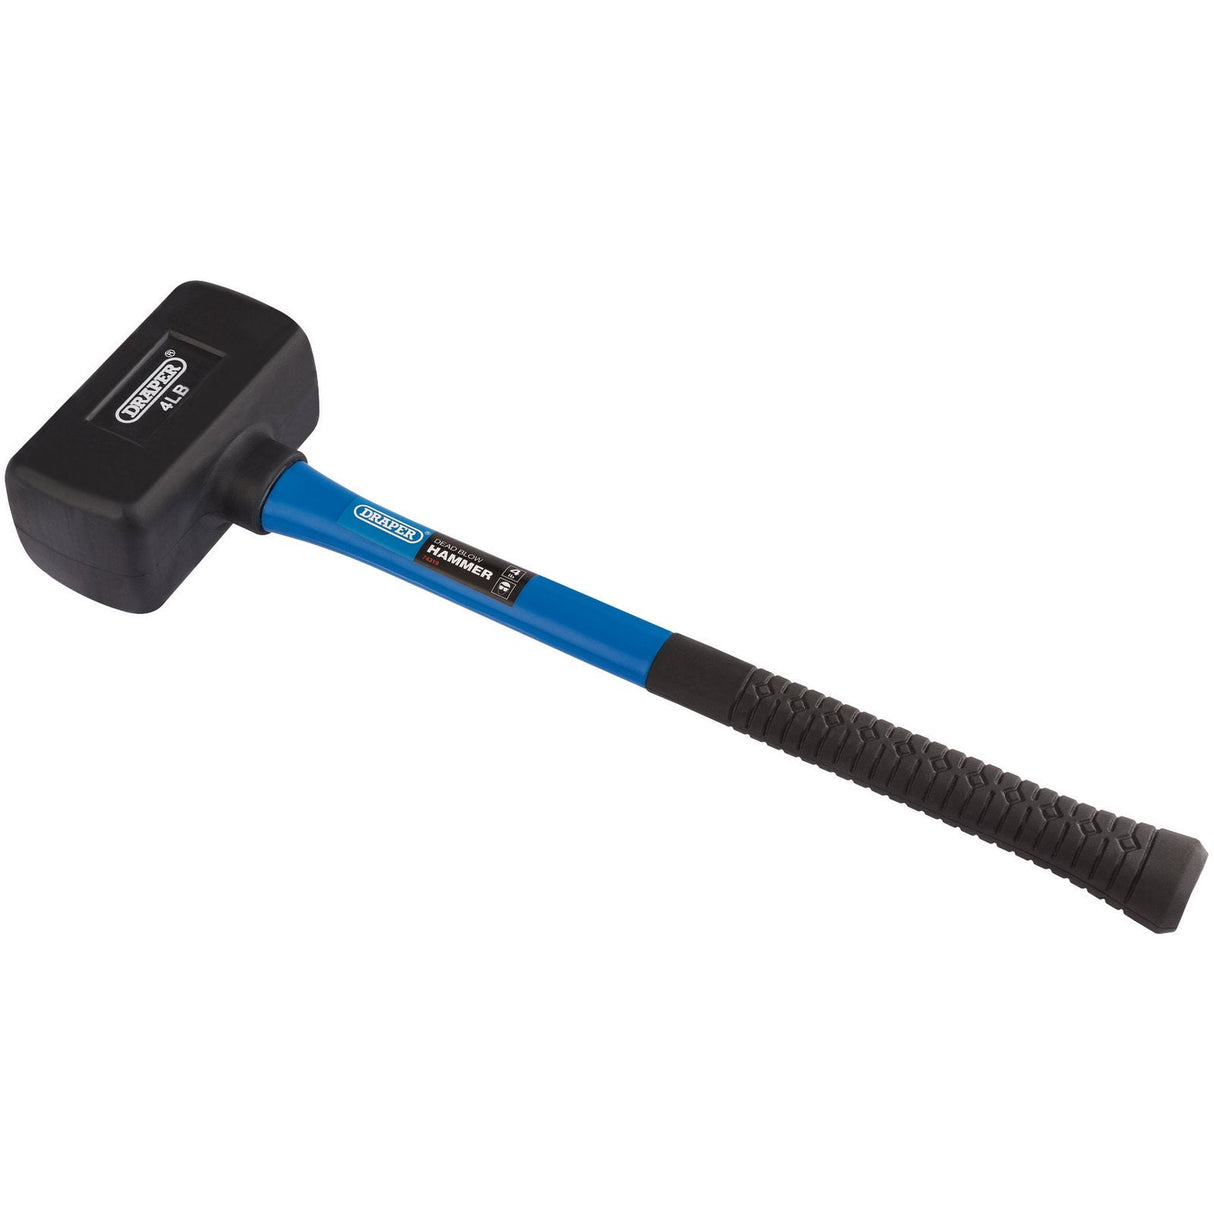 Draper Rubber Dead Blow Hammer With Fibreglass Shaft, 1.8Kg/4Lb - DBH20 - Farming Parts